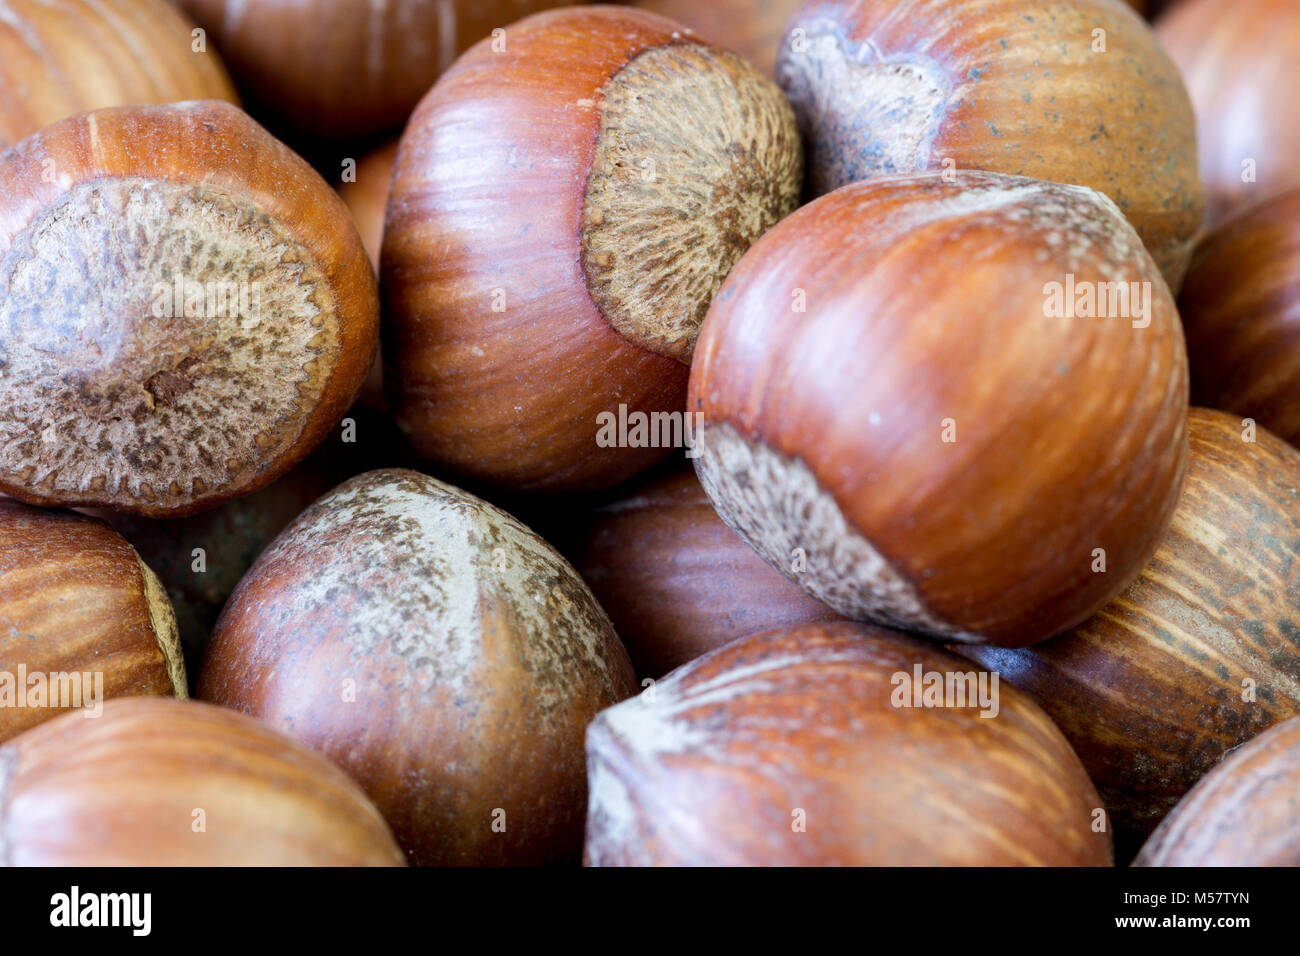 Close up of some unshelled hazelnuts Stock Photo